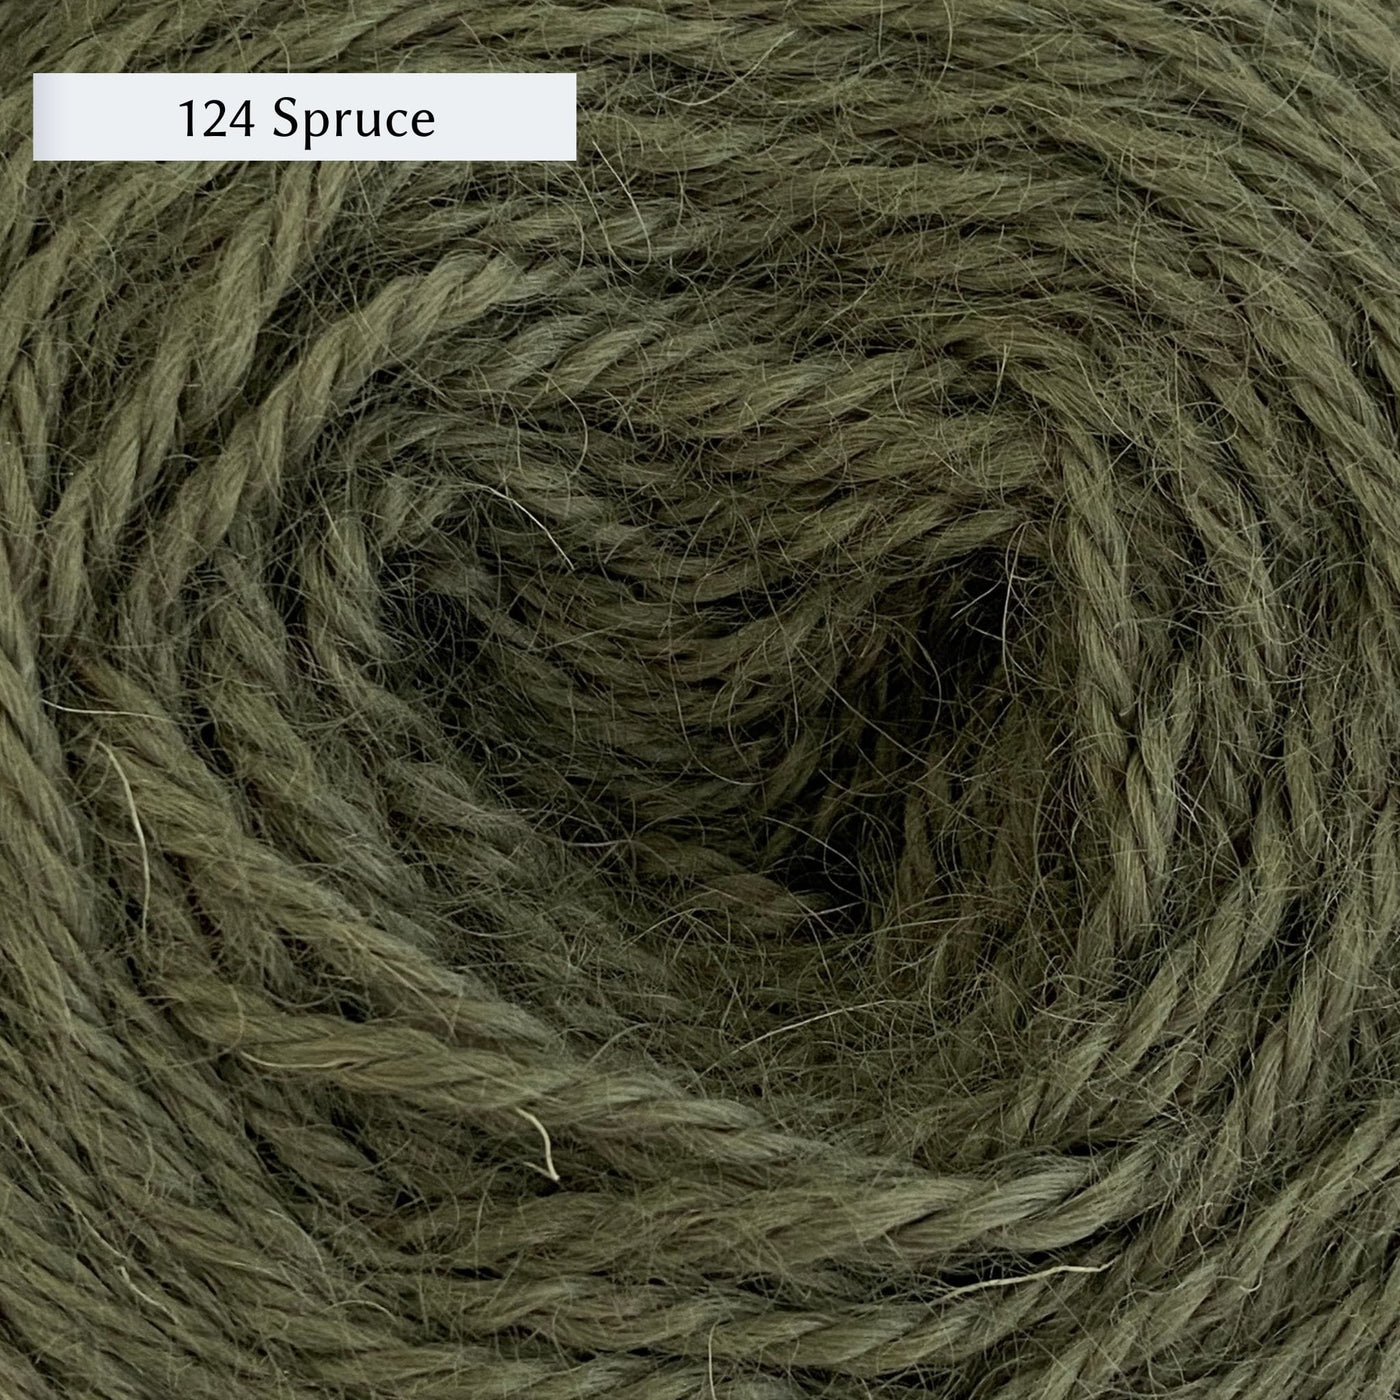 Wensleydale Longwool Aran, an aran weight yarn made from Wensleydale sheep, in color 124 Spruce, a light pine green